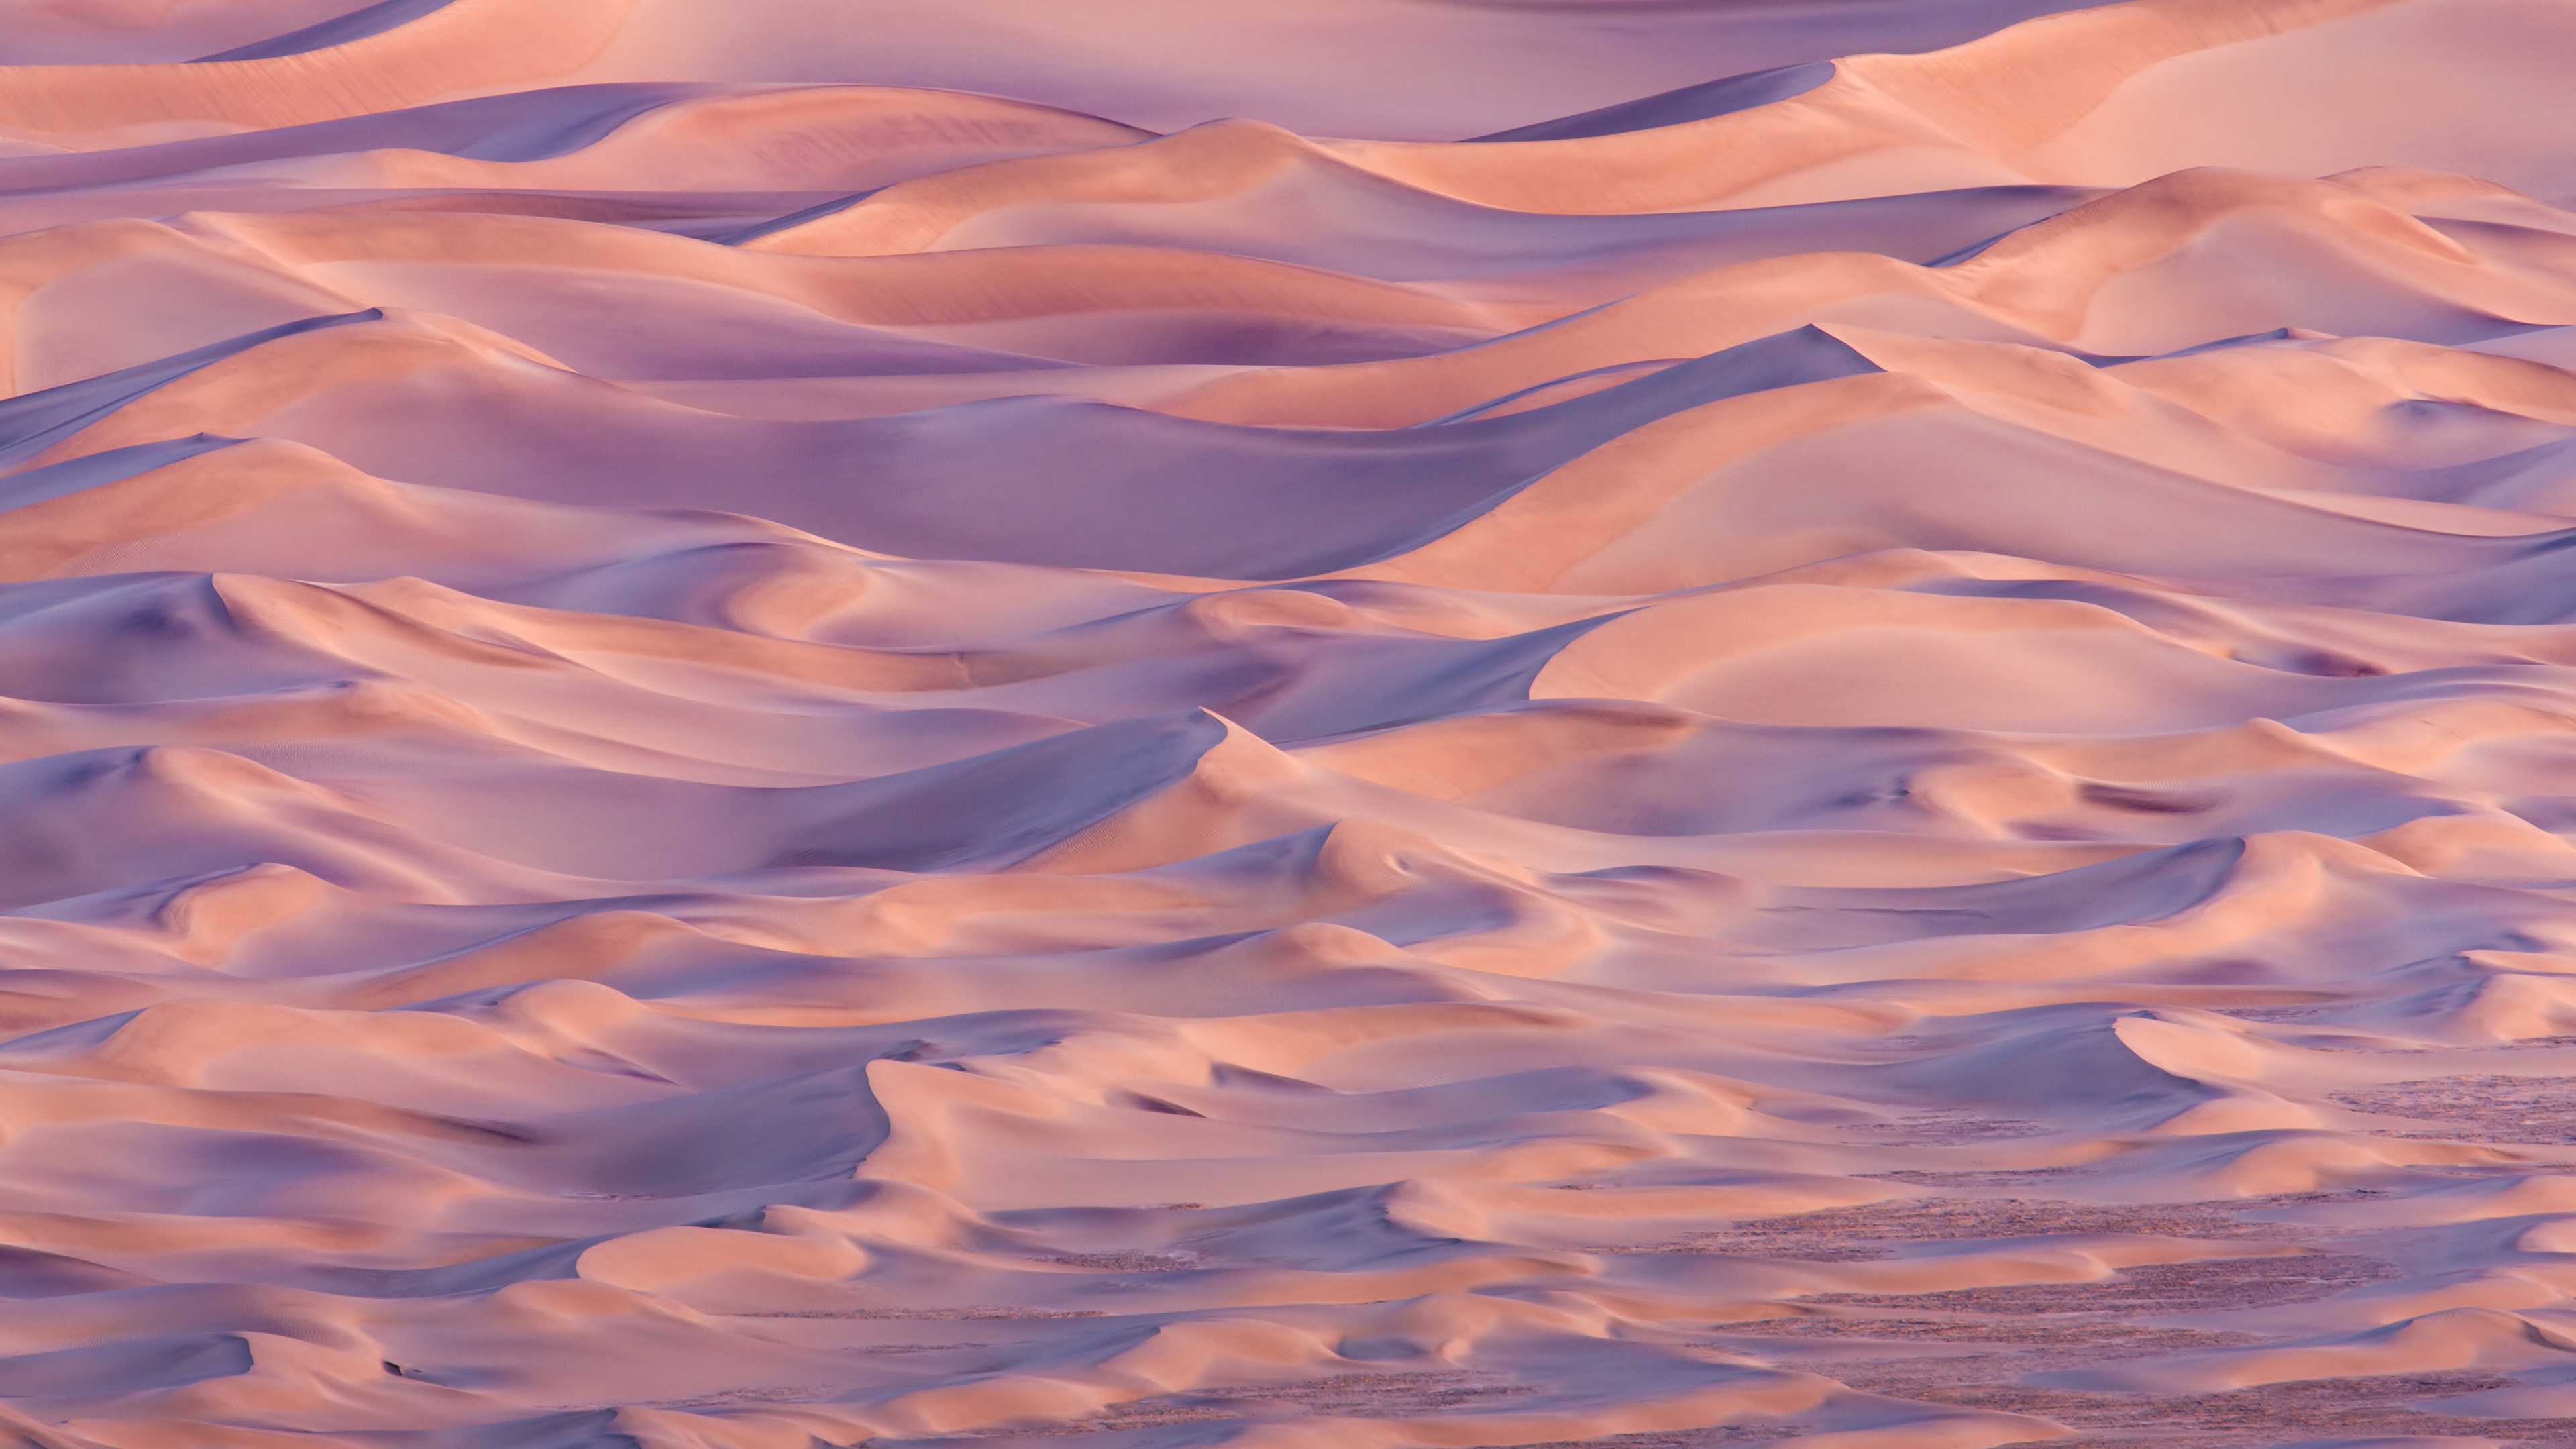 Desert 4k Ultra Hd Wallpaper Background Image 3840x2160